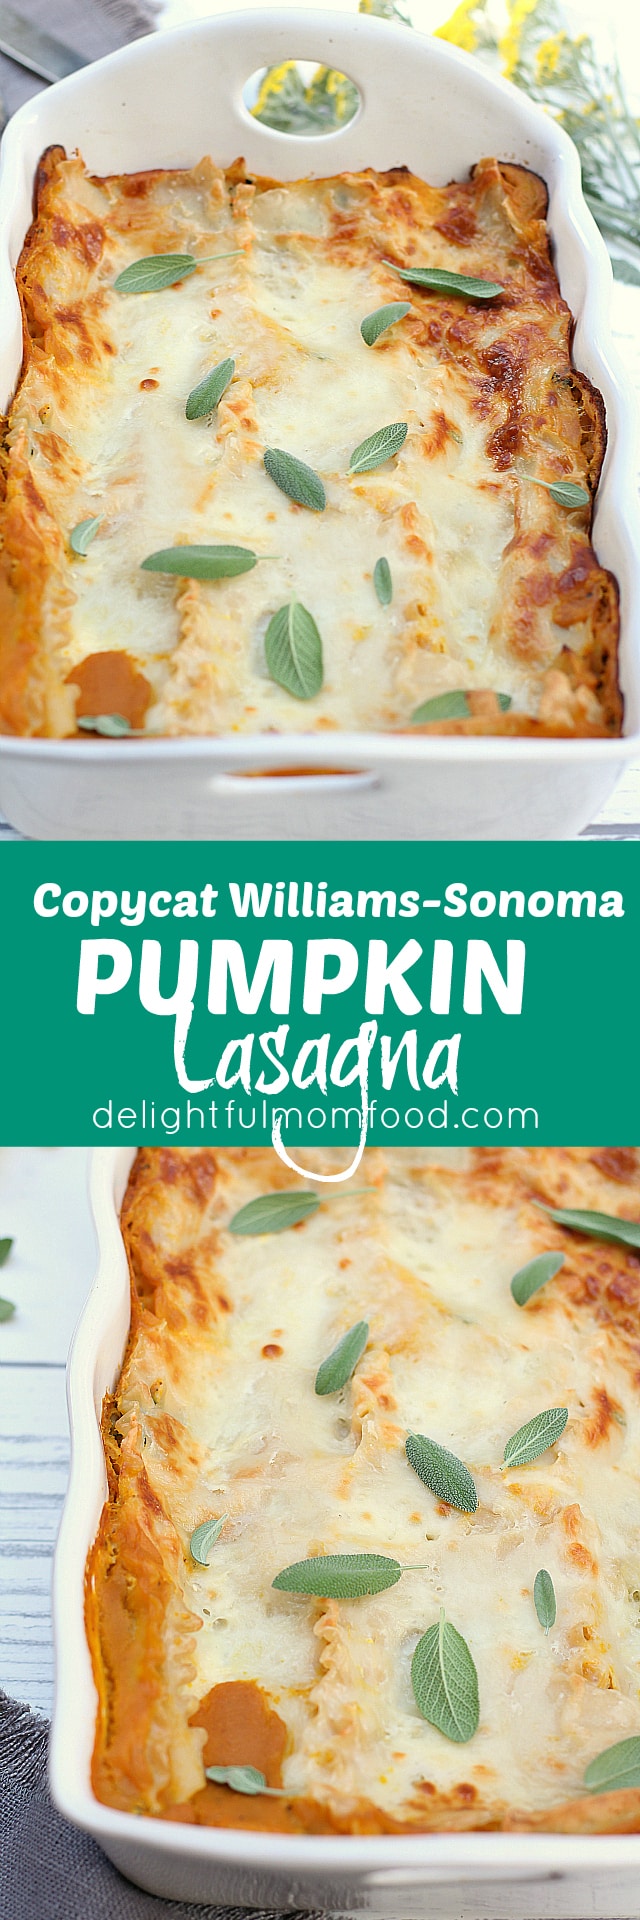 Pumpkin Lasagna with Spinach Ricotta Filling